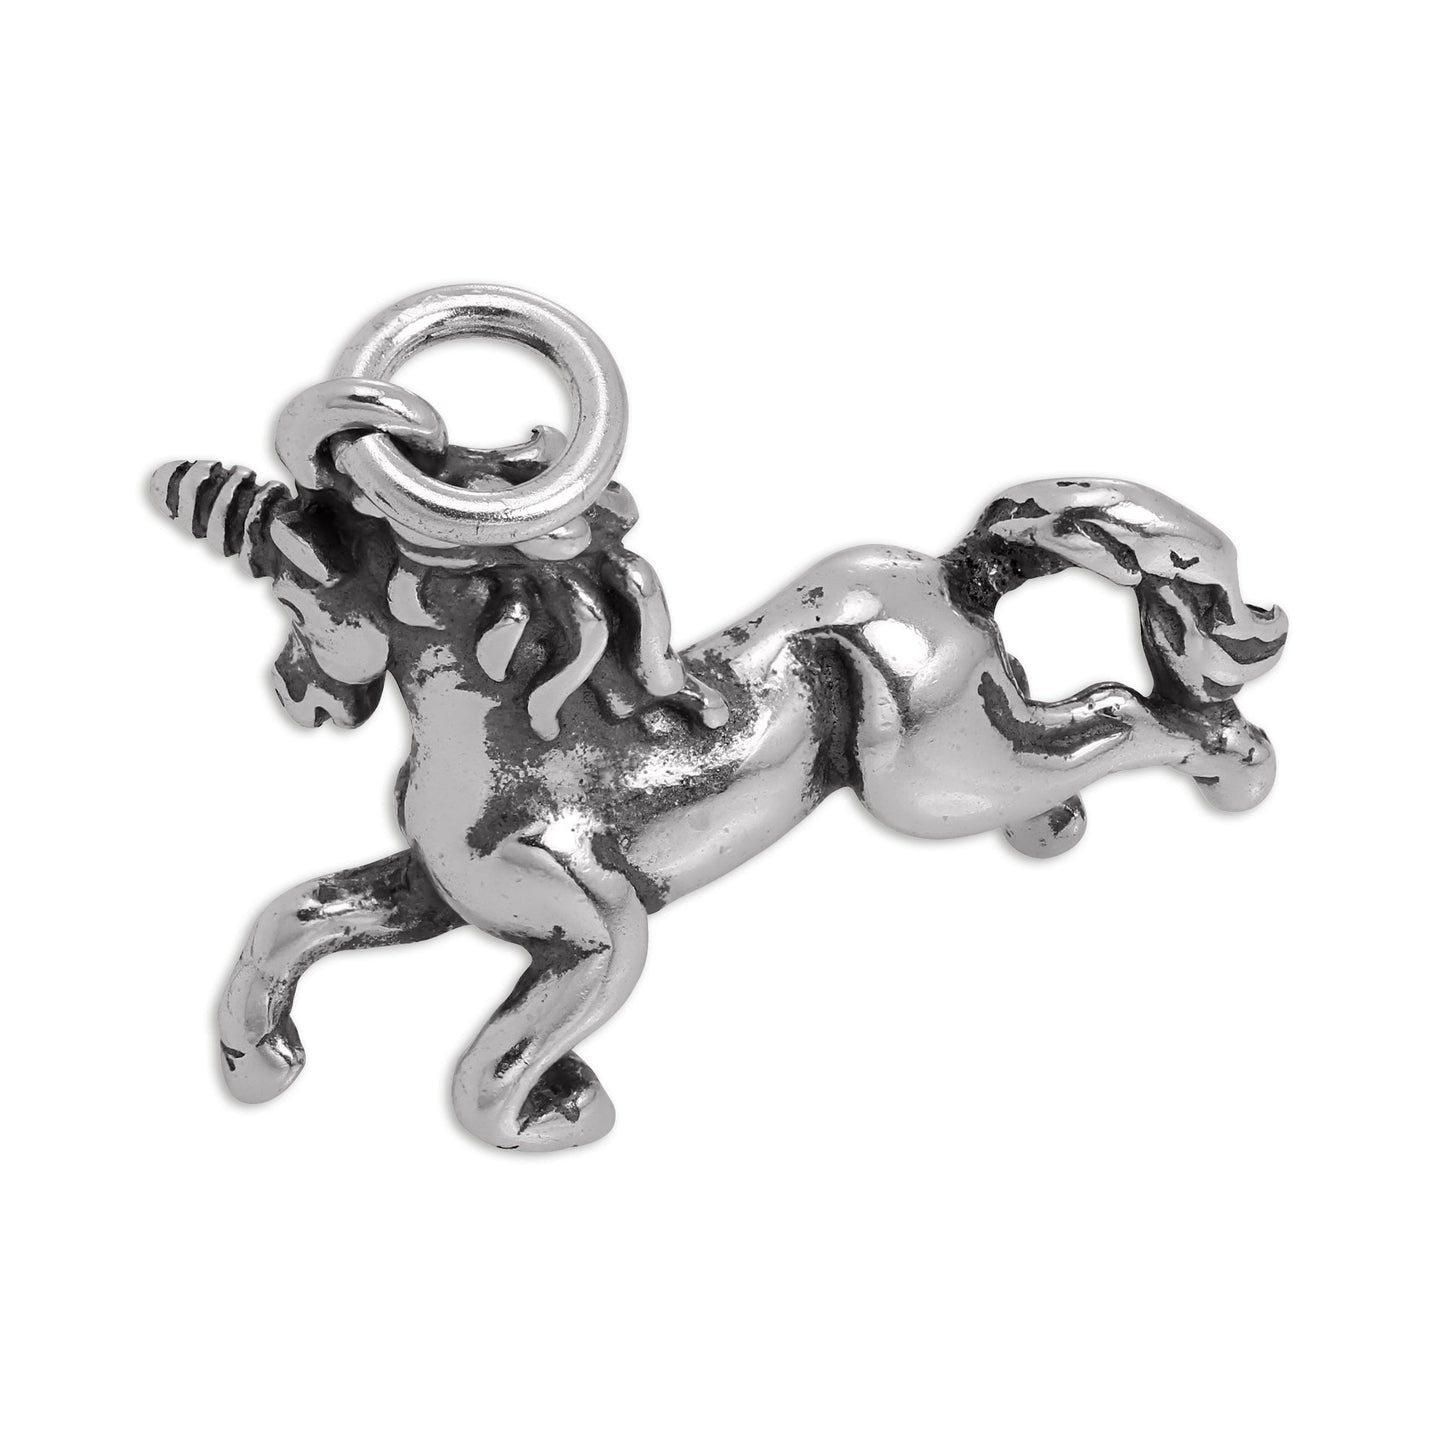 Sterling Silver Prancing Unicorn Charm